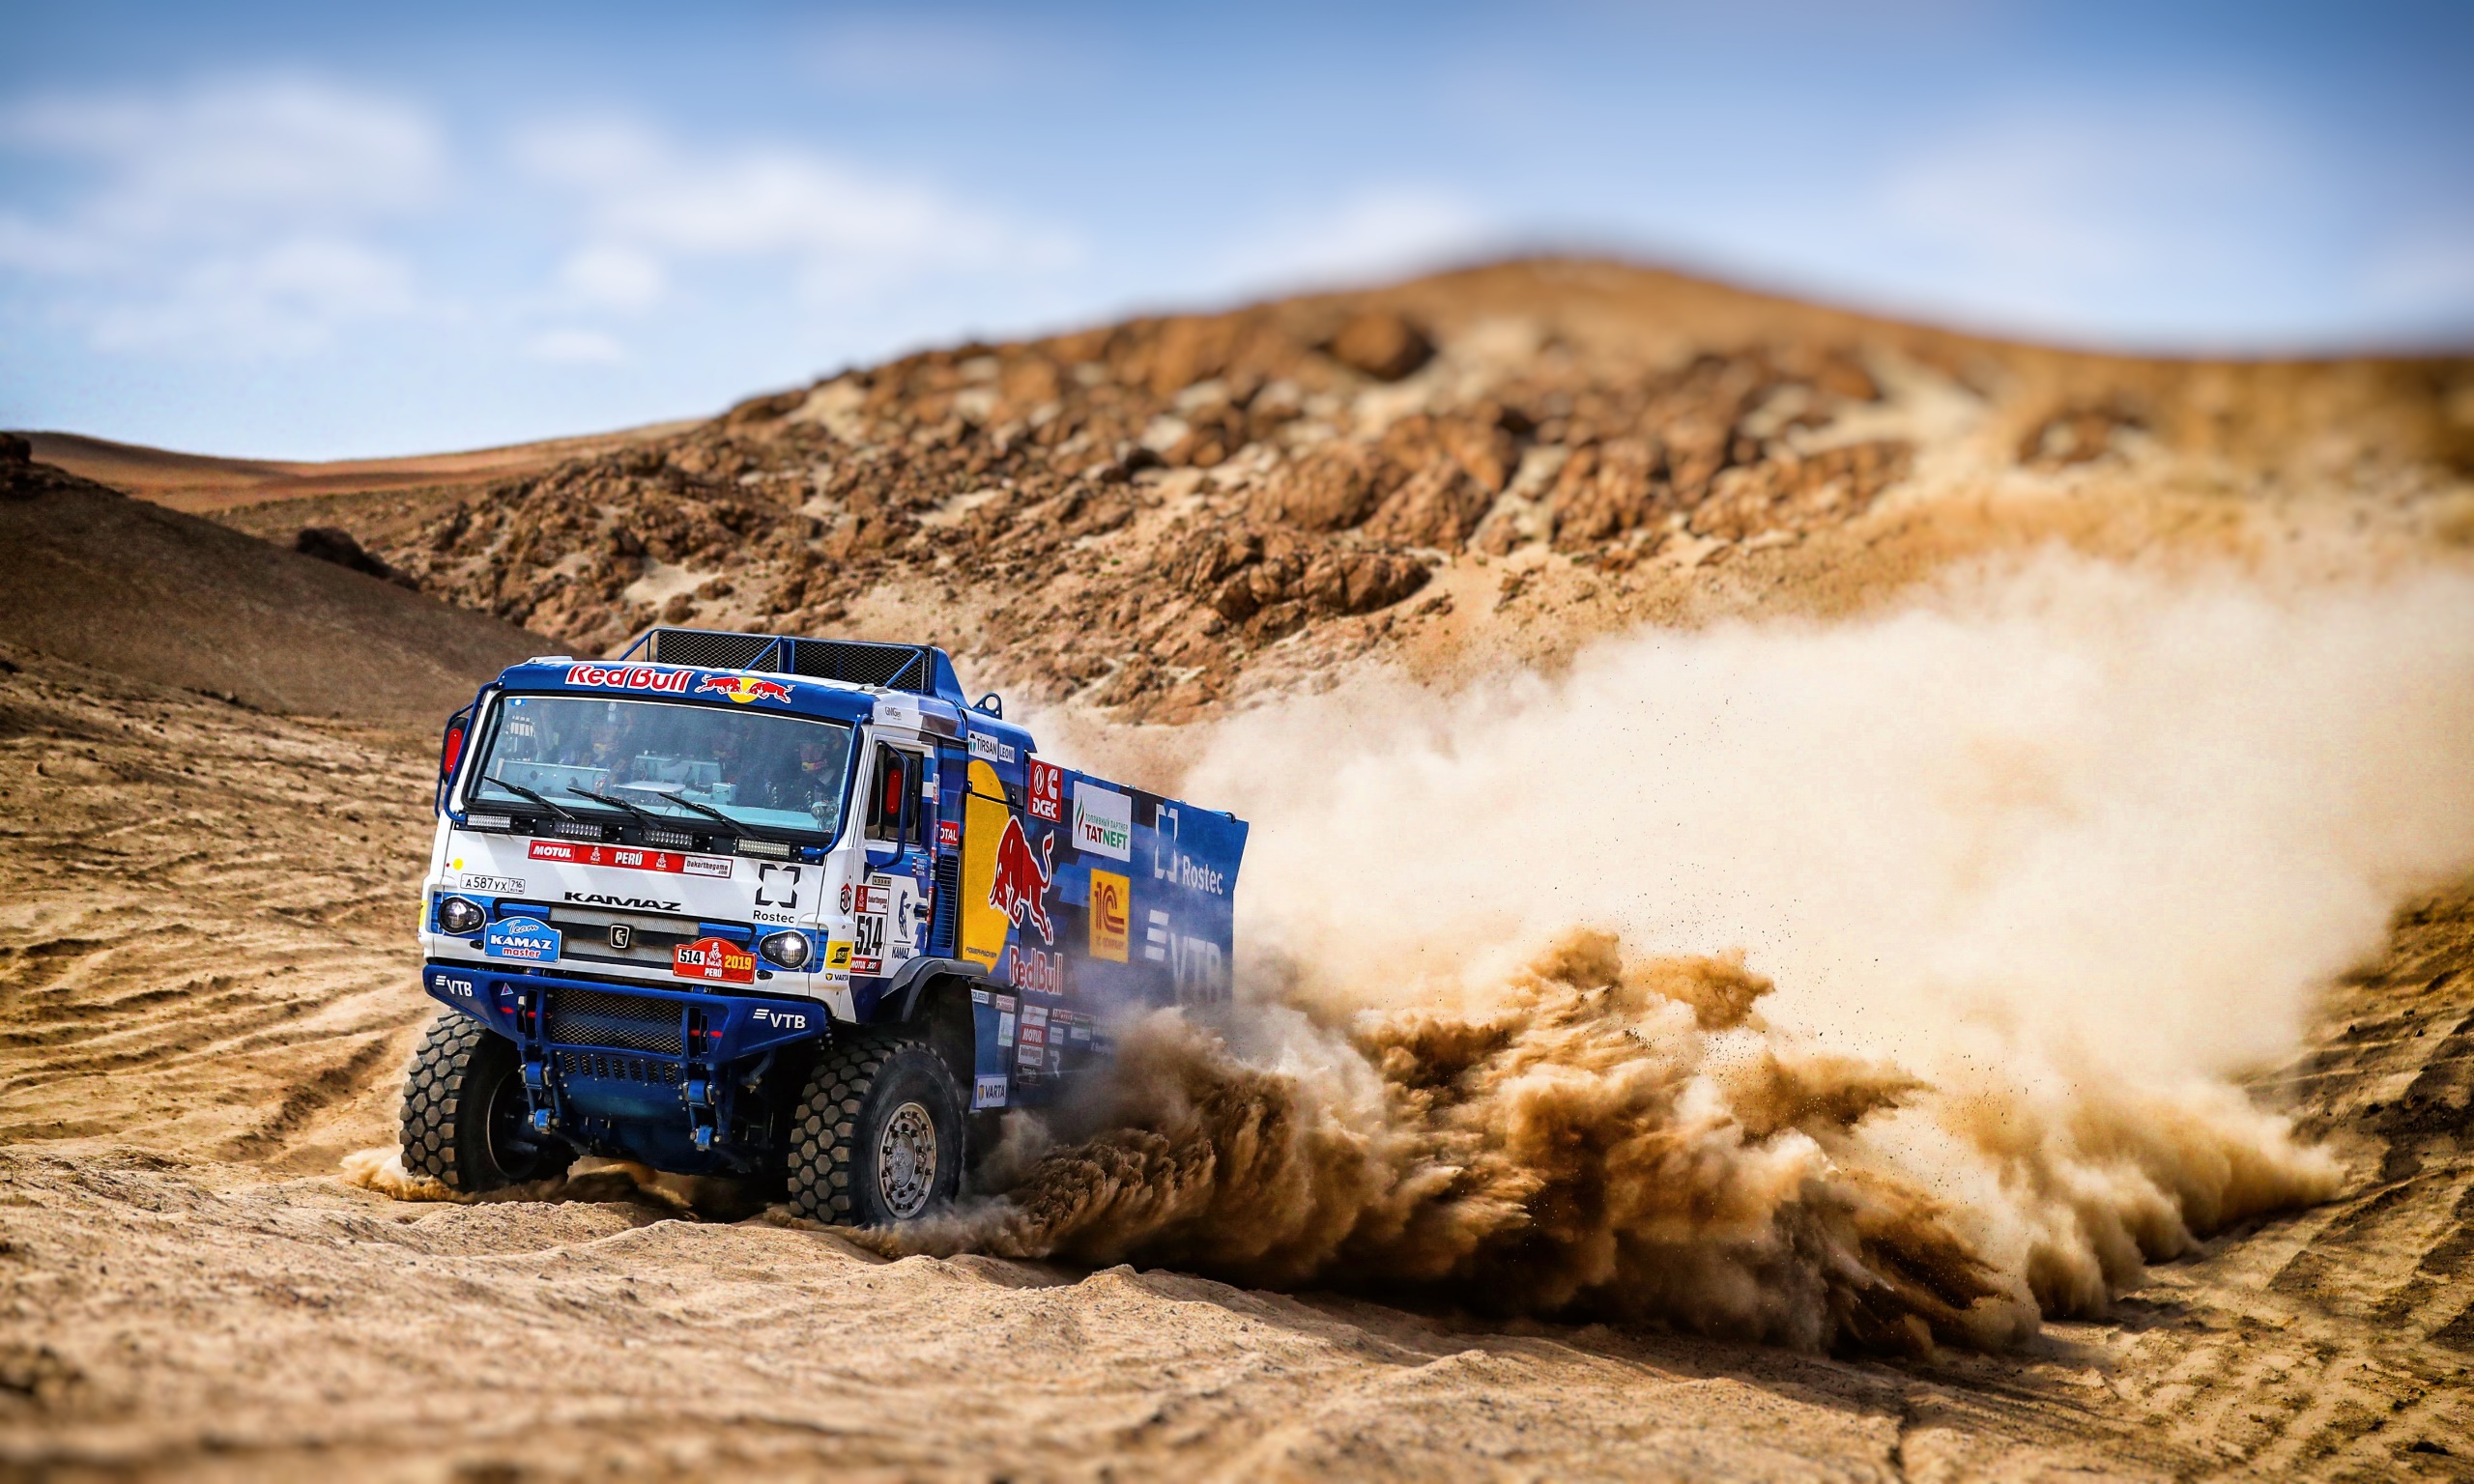 General 2560x1536 desert Rally vehicle truck racing Kamaz motorsport Red Bull Racing sand sport Blue Trucks livery Russian trucks